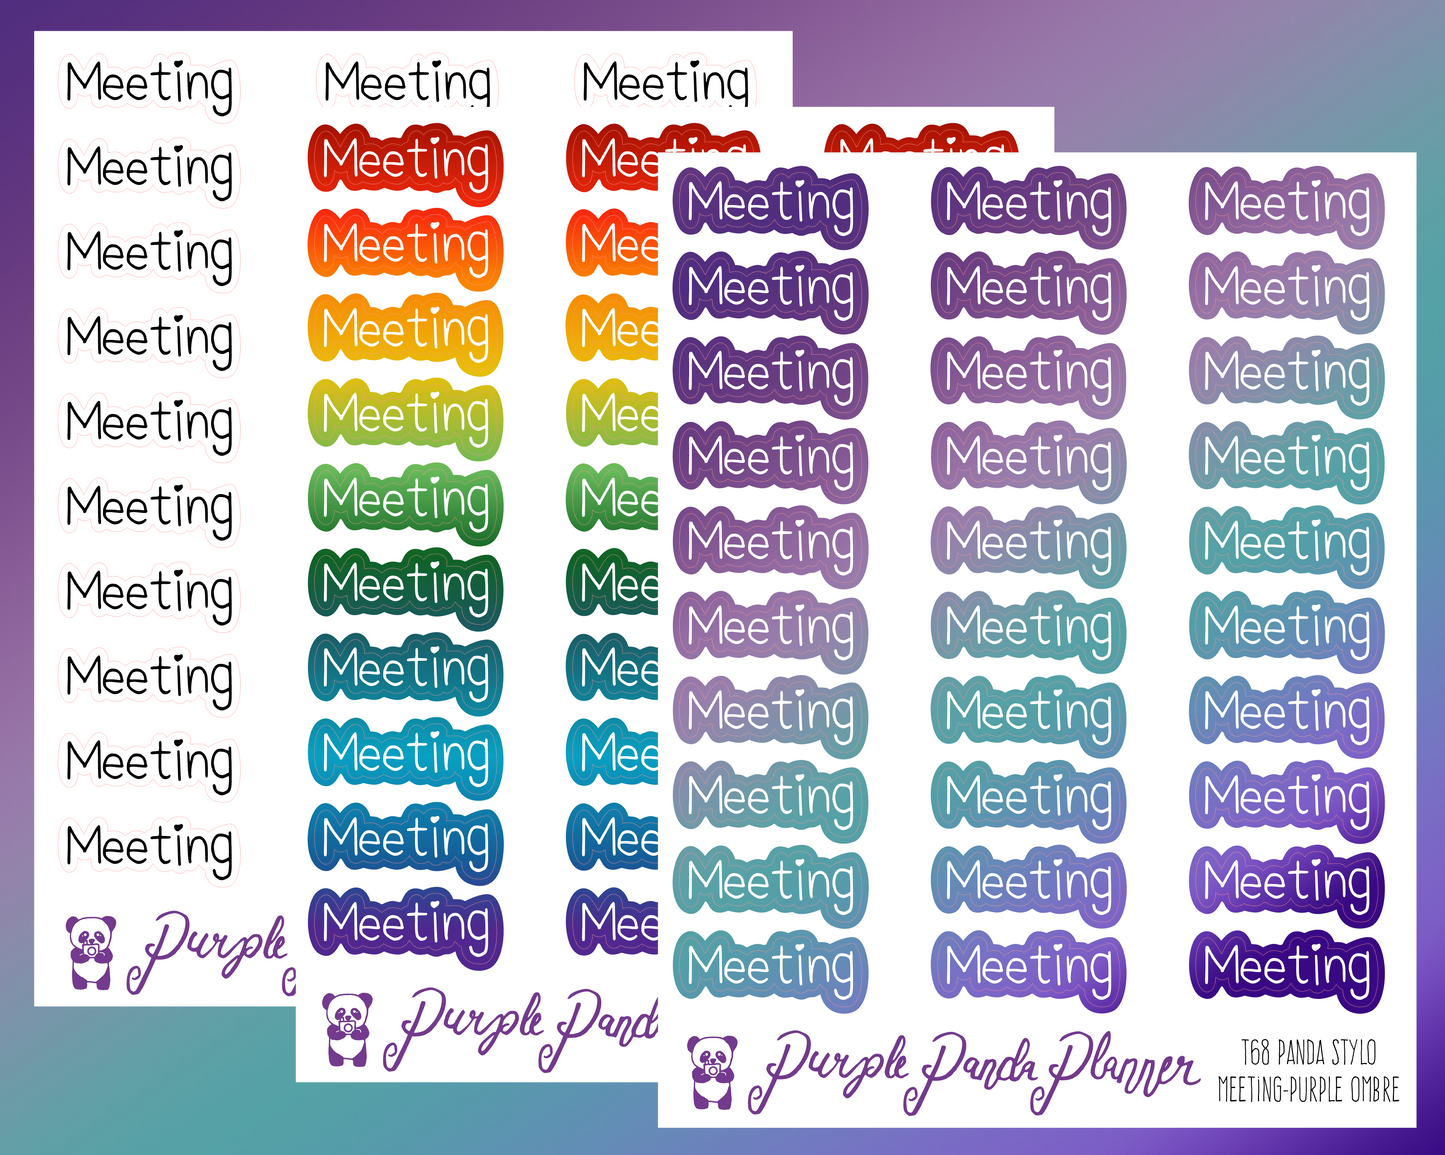 Meeting (T68) - Panda Stylo Script - Black, Rainbow, or Purple Ombre